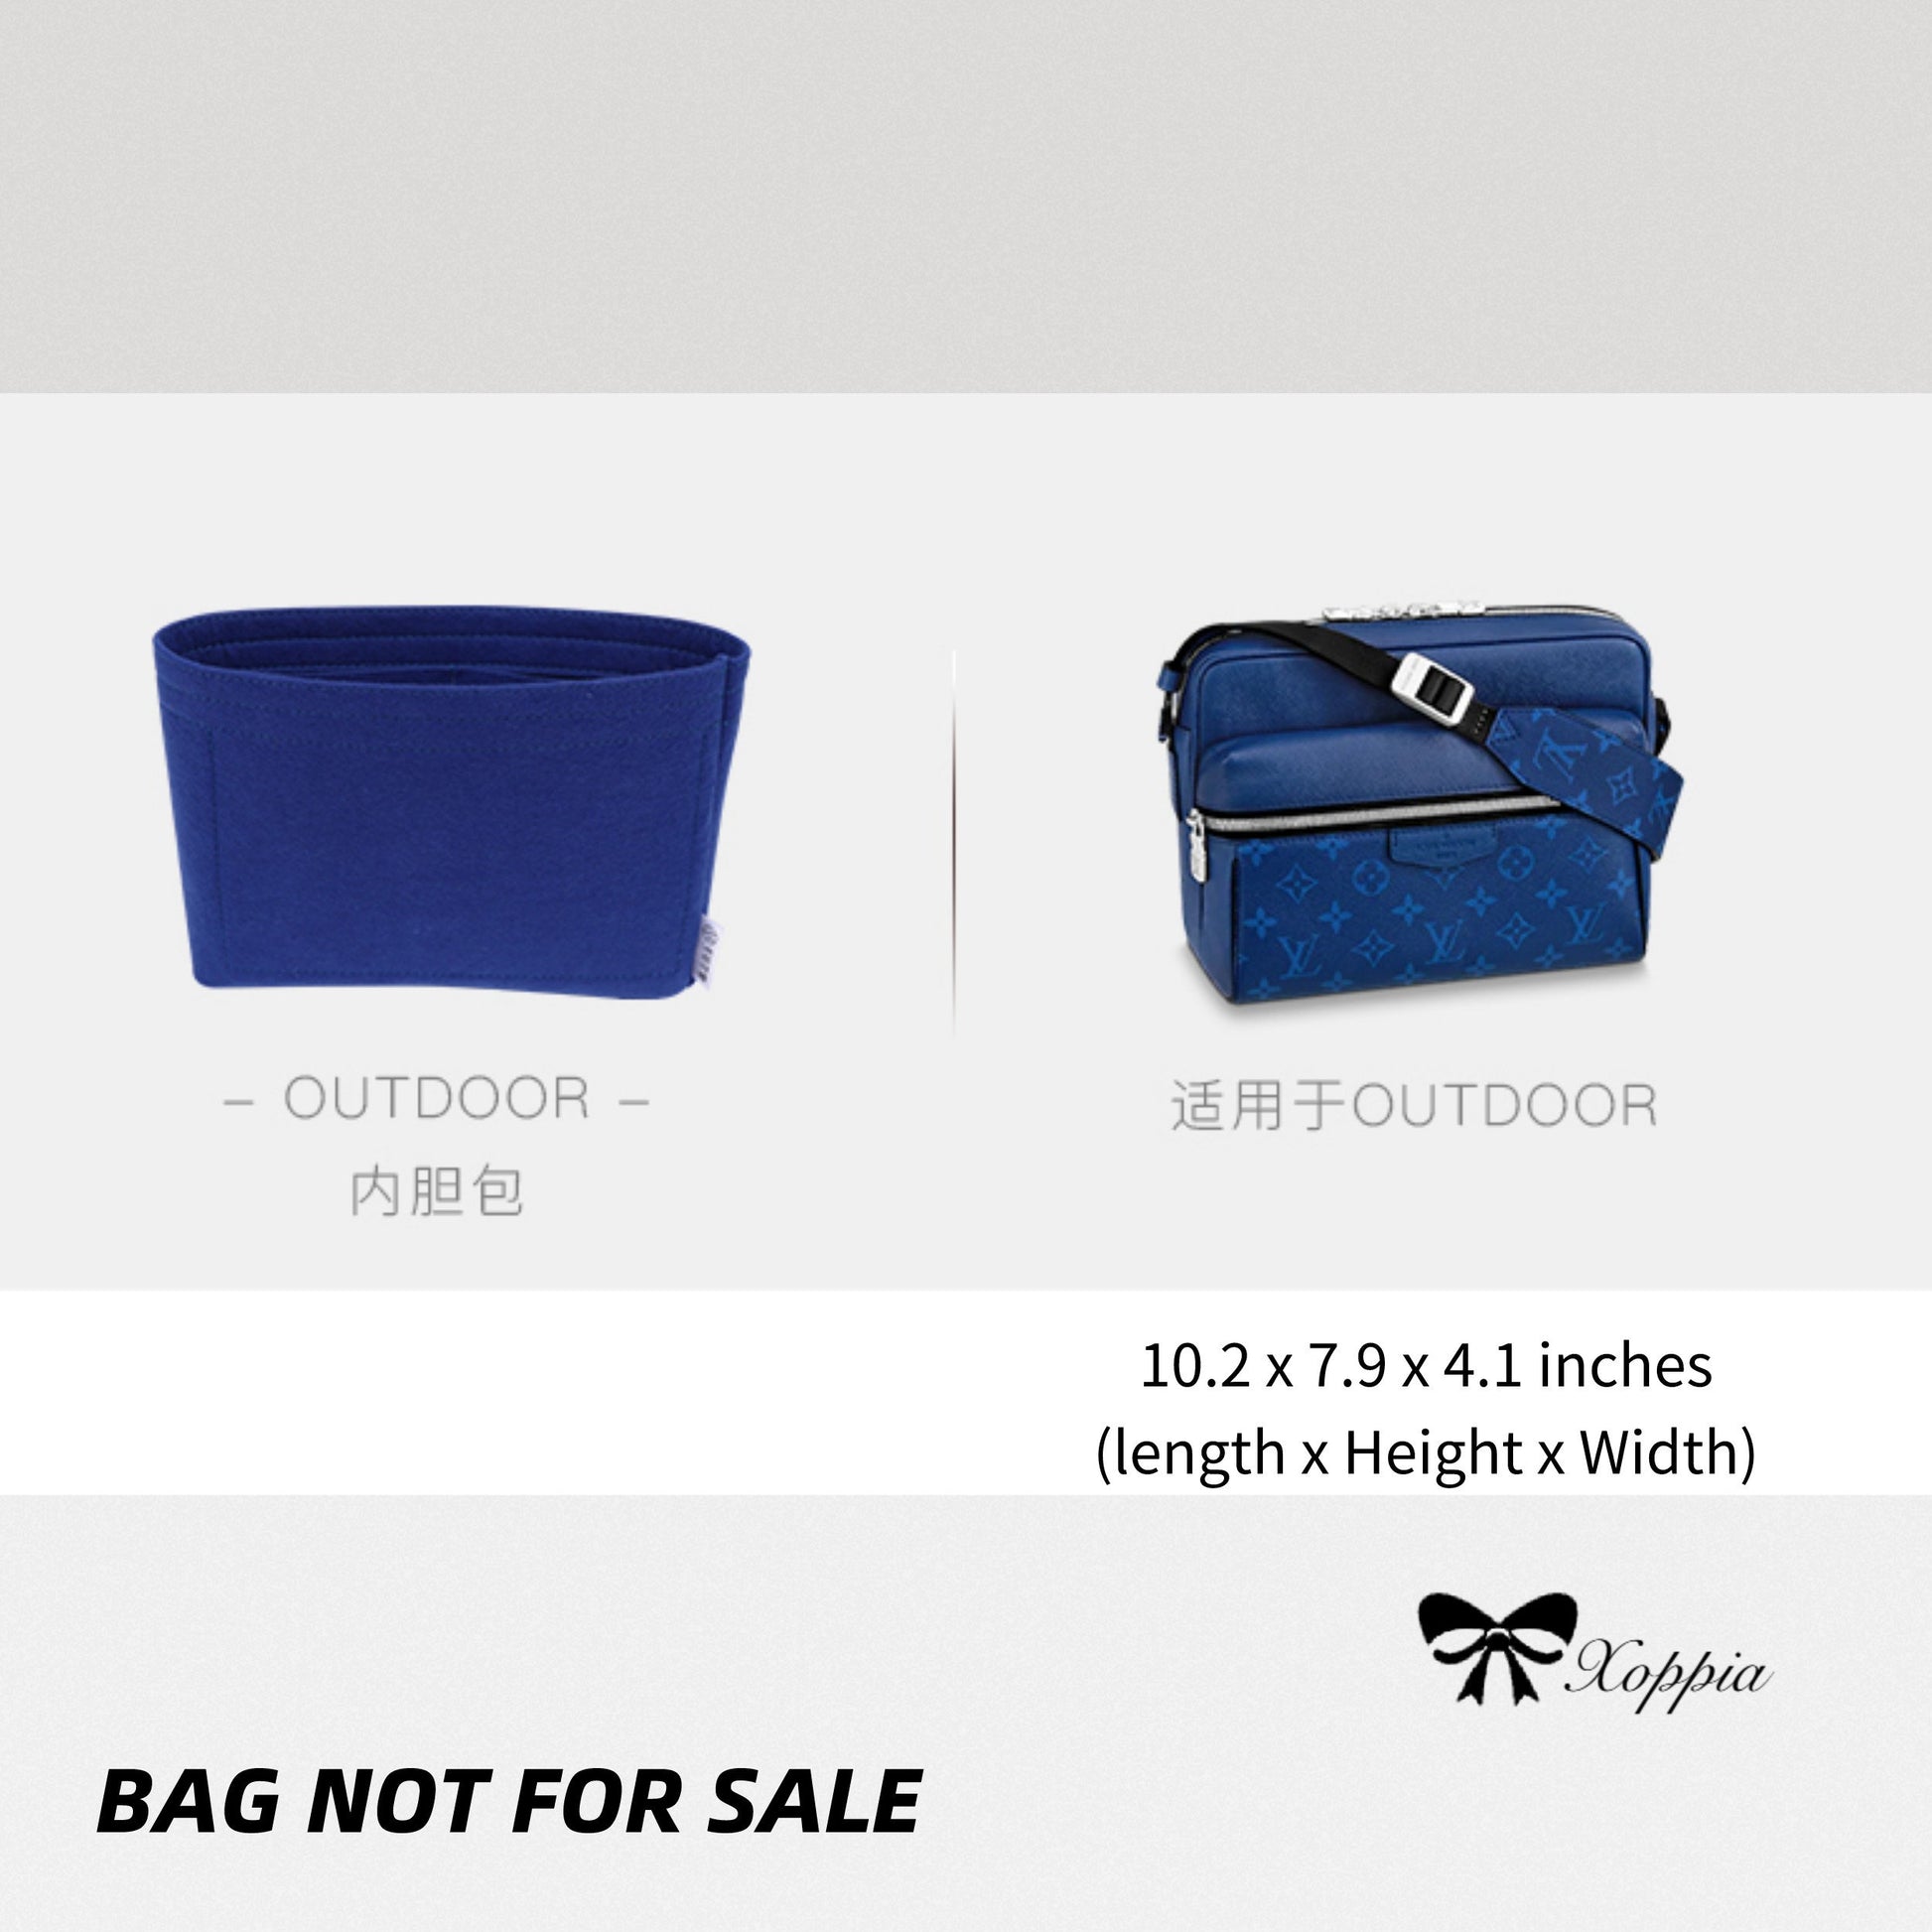 Outdoor Messenger Taigarama - Men - Bags